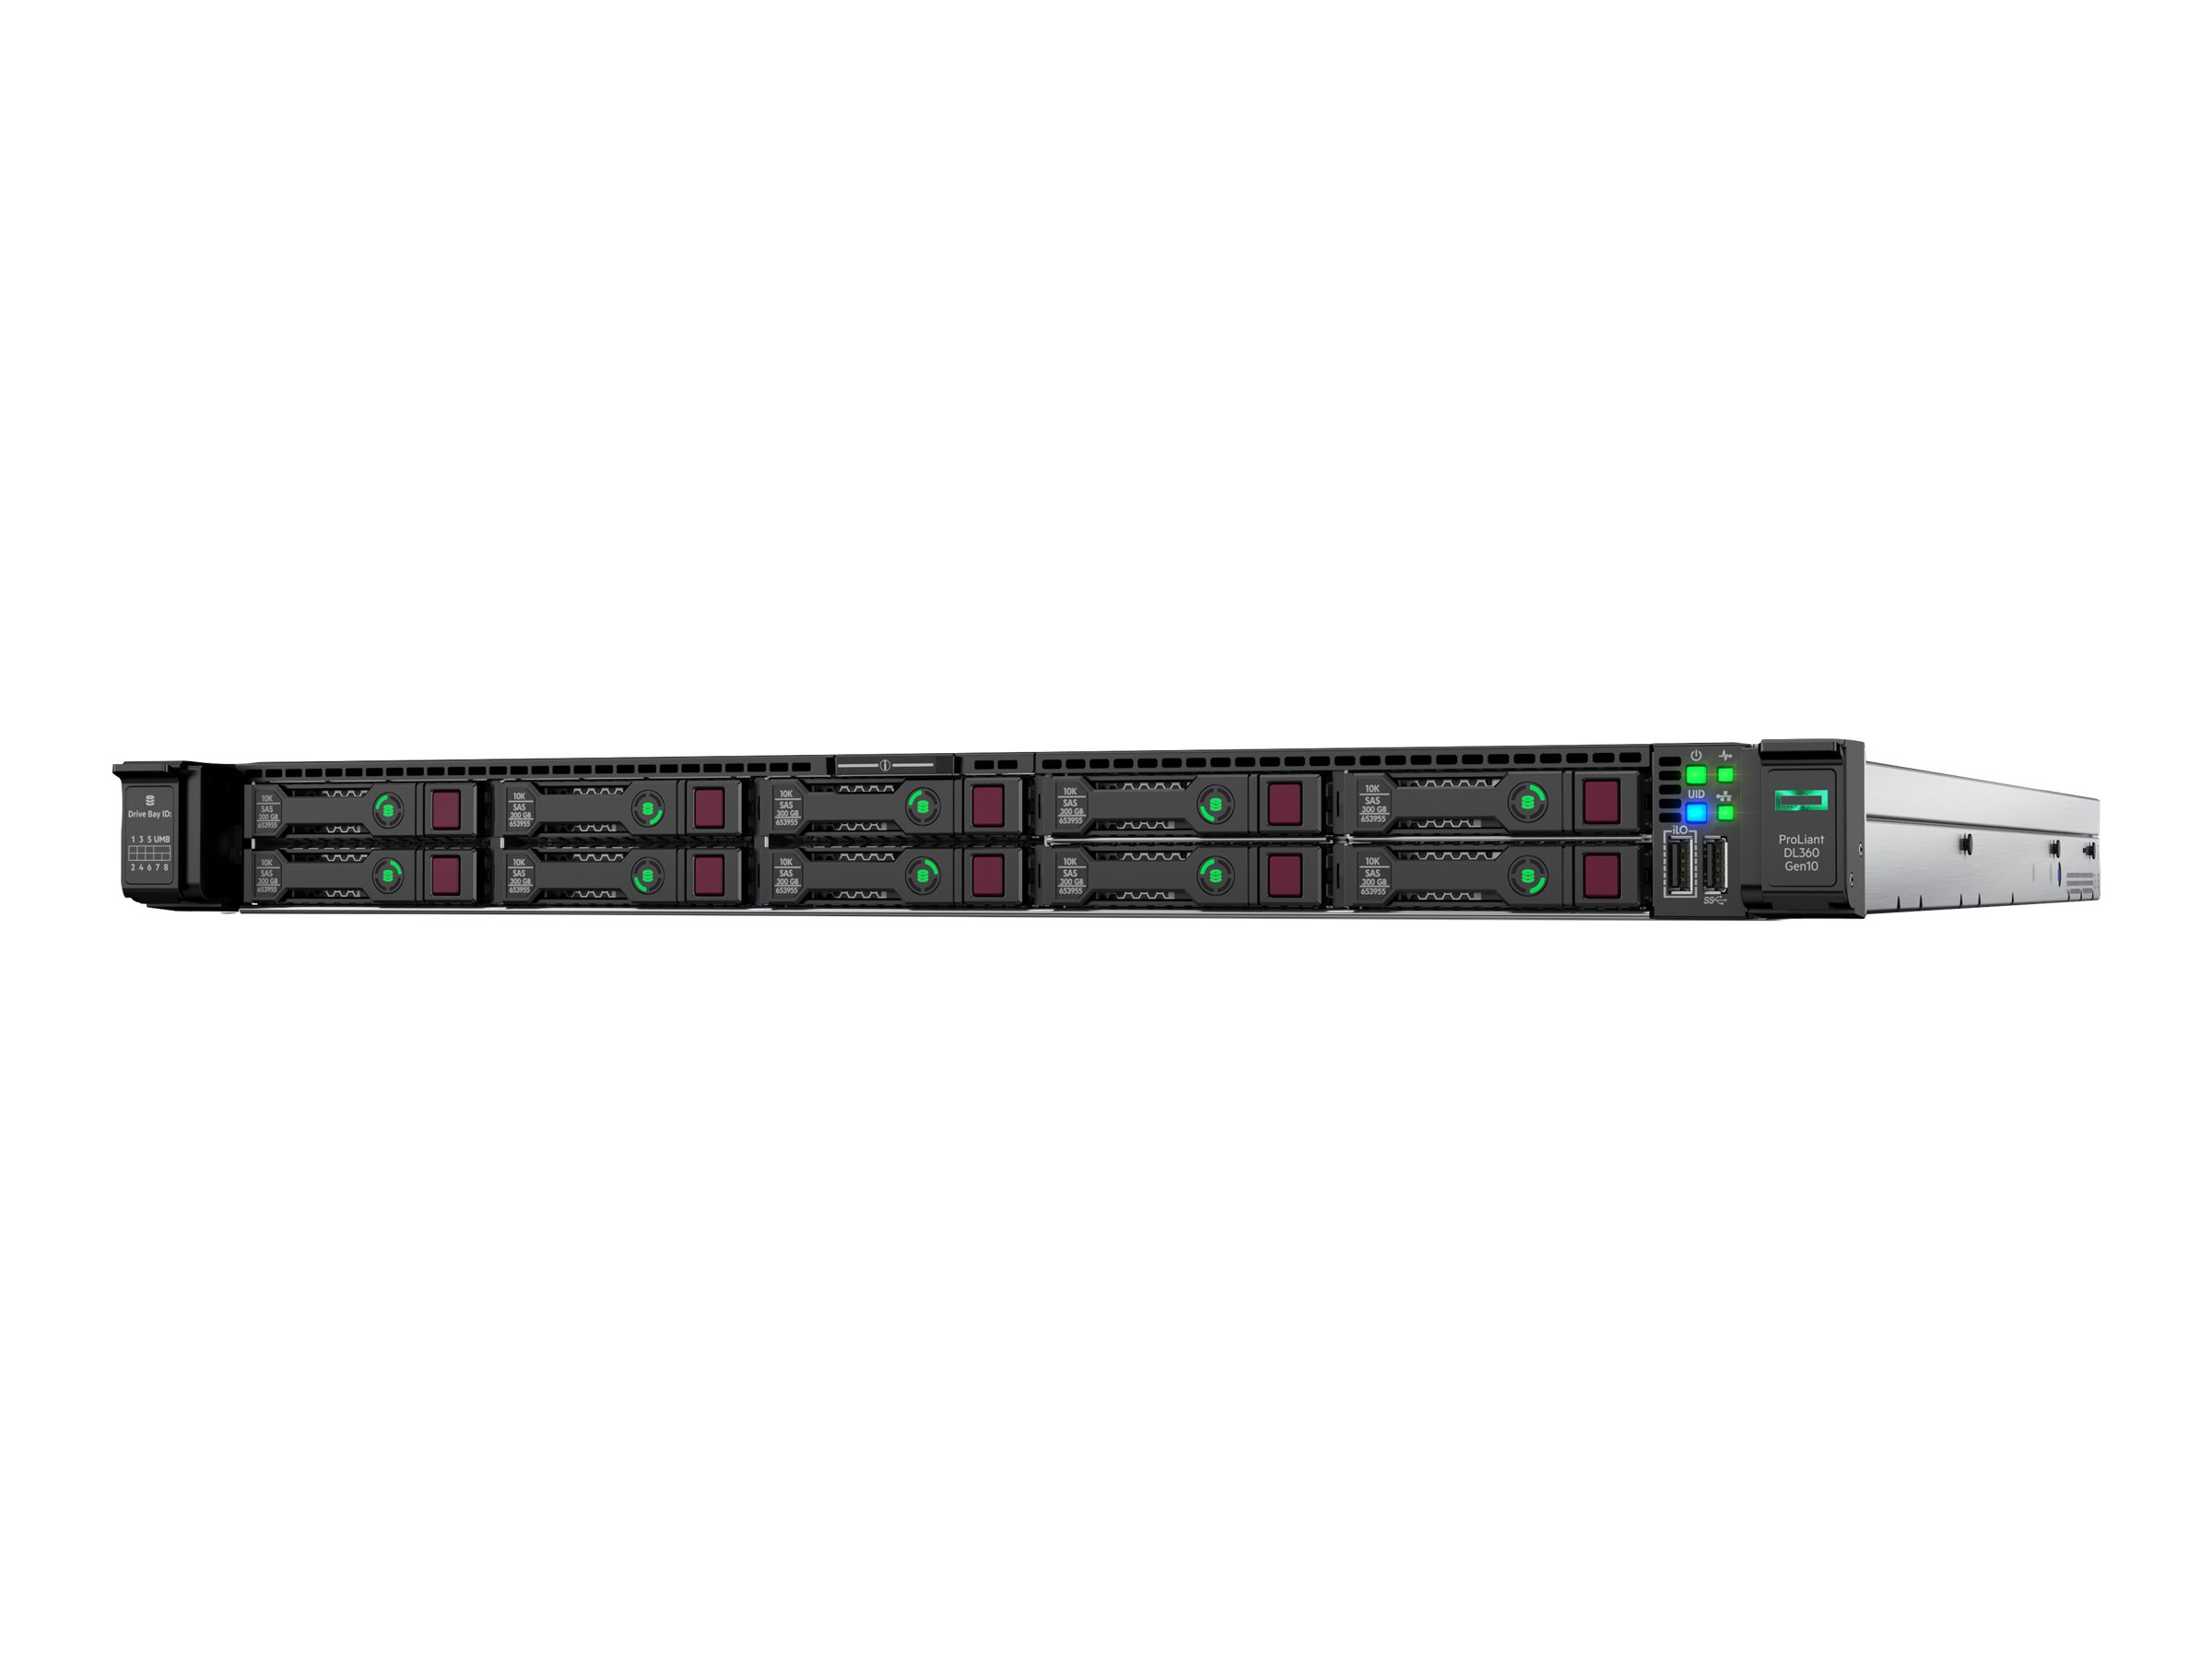 HPE ProLiant DL360 Gen10, 1U Rack SFF, 1x Xeon-S 4208 (2.1GHz/8c), 1x 16GB, P408i-a/2G+Akku, 8x SFF Slots Hot-Plug, kein opt. LW, 4x 1G RJ45 (366FLR), 1x 500W Netzteil, 5 Lüfter, Easy Install Rails OHNE CMA, Garantie 3-3-3